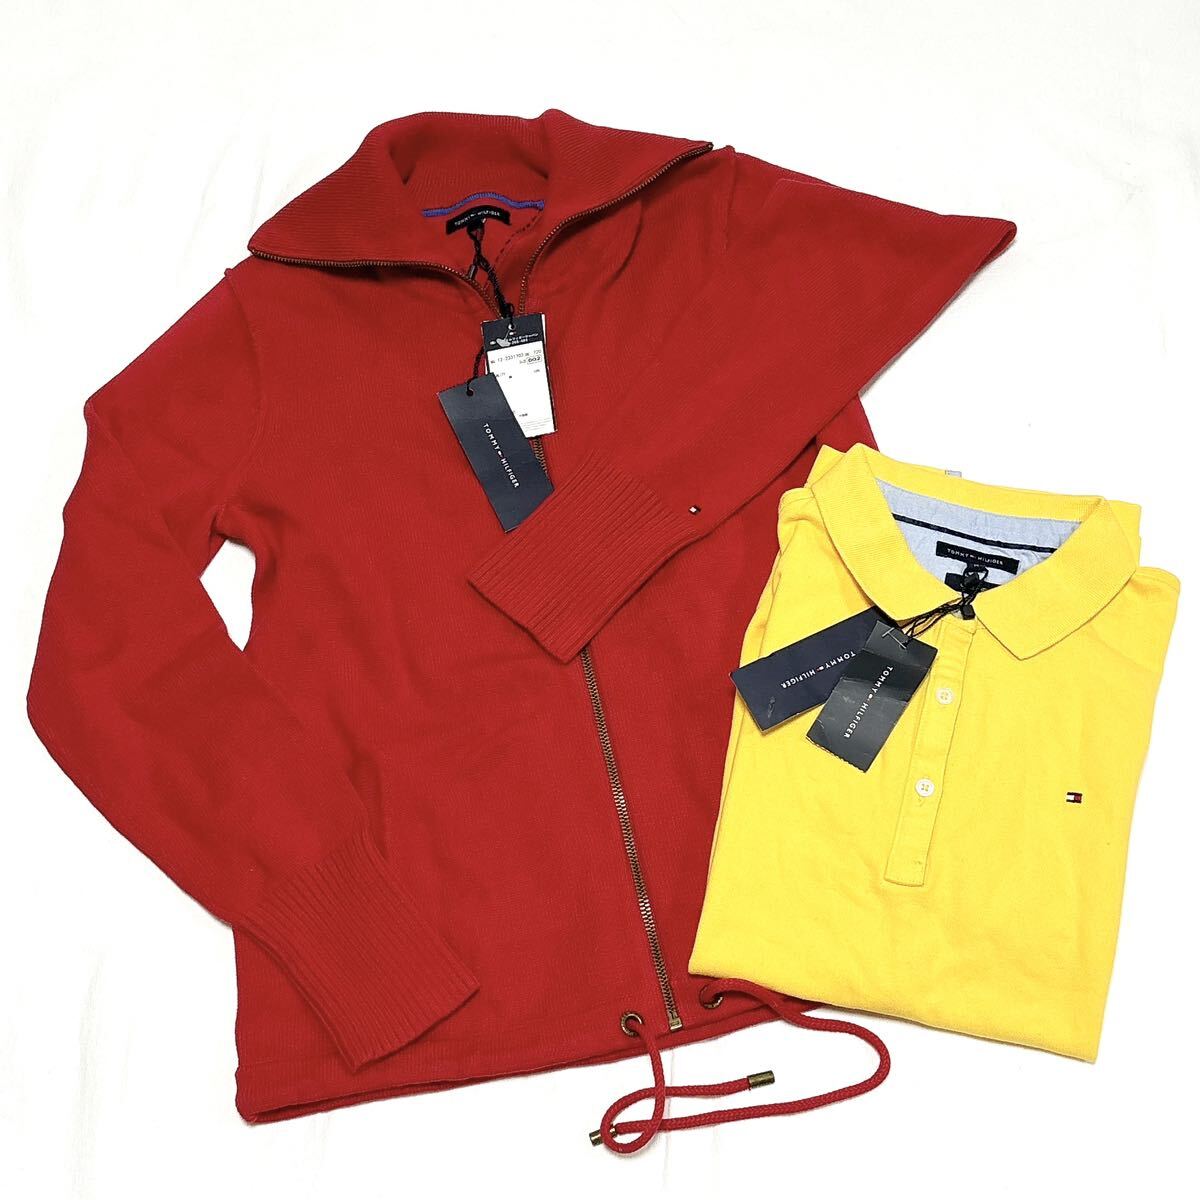 TOMY HILFIGER トミー パーカー ポロシャツ Classic Fit 黄 赤 Mサイズ 未使用 alp梅0423_画像1